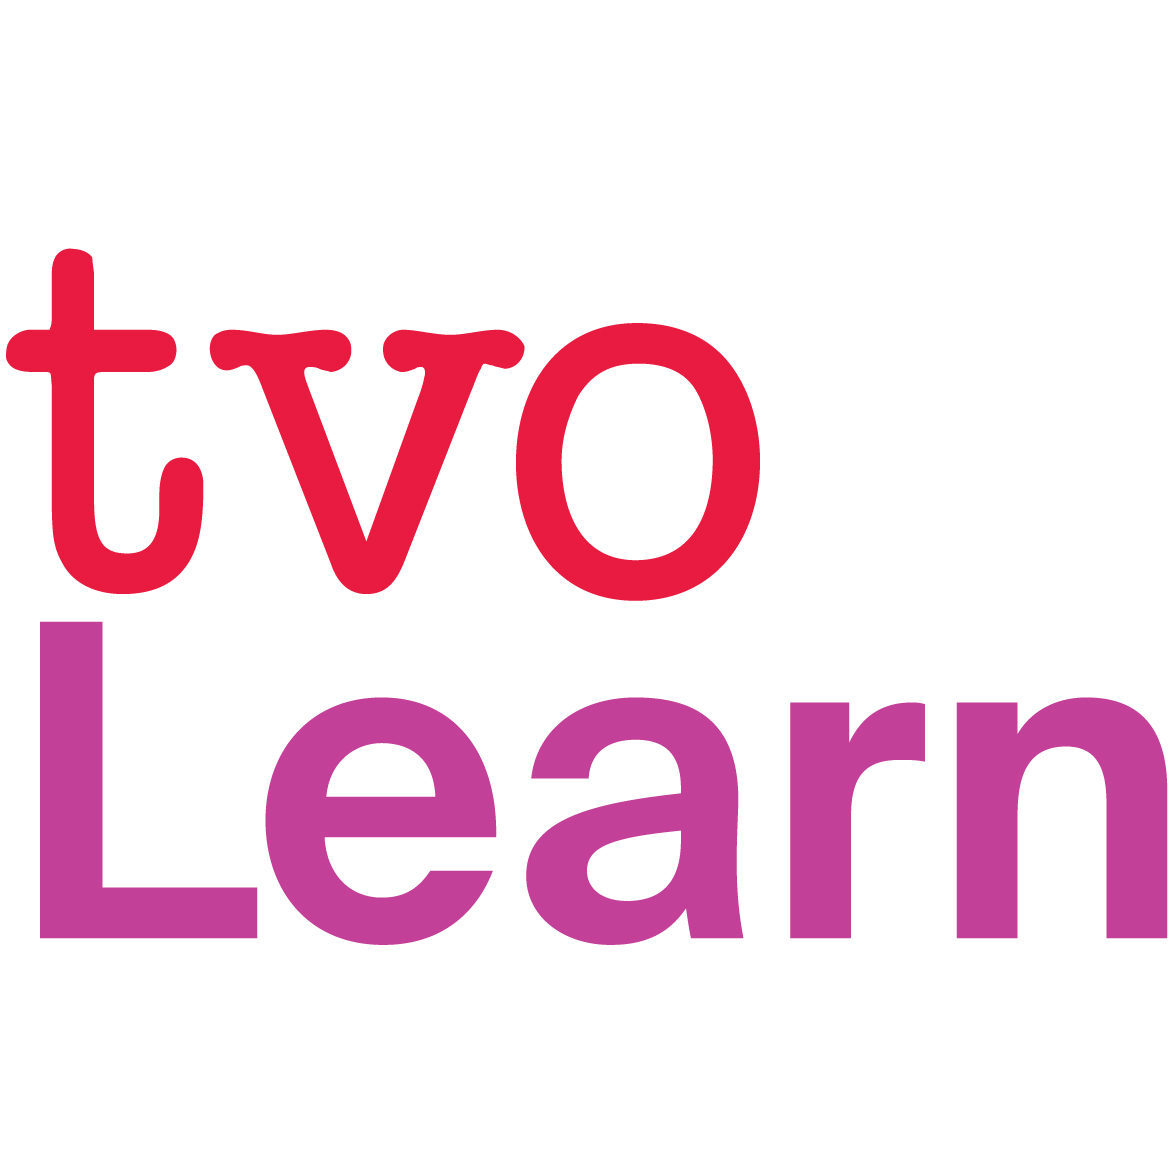 TVO Learn logo